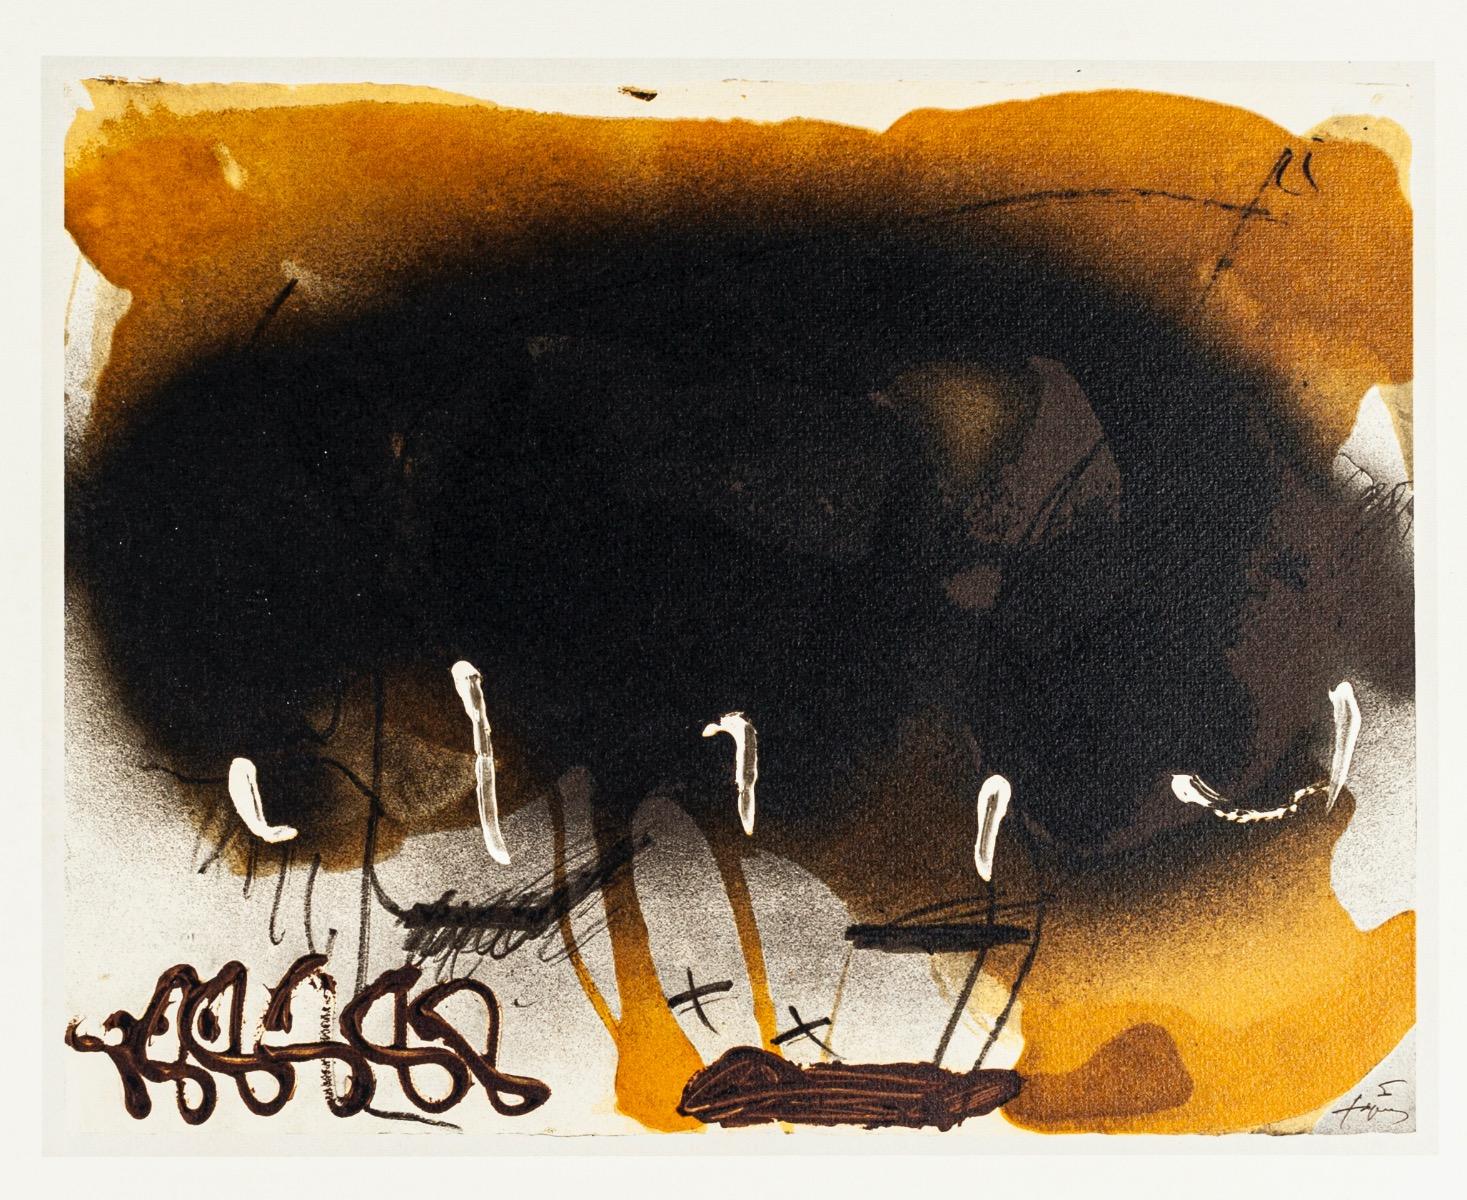 Antoni Tàpies (after) Abstract Print - Black Fan - Vintage Offset Print After Antoni Tàpies - 1982